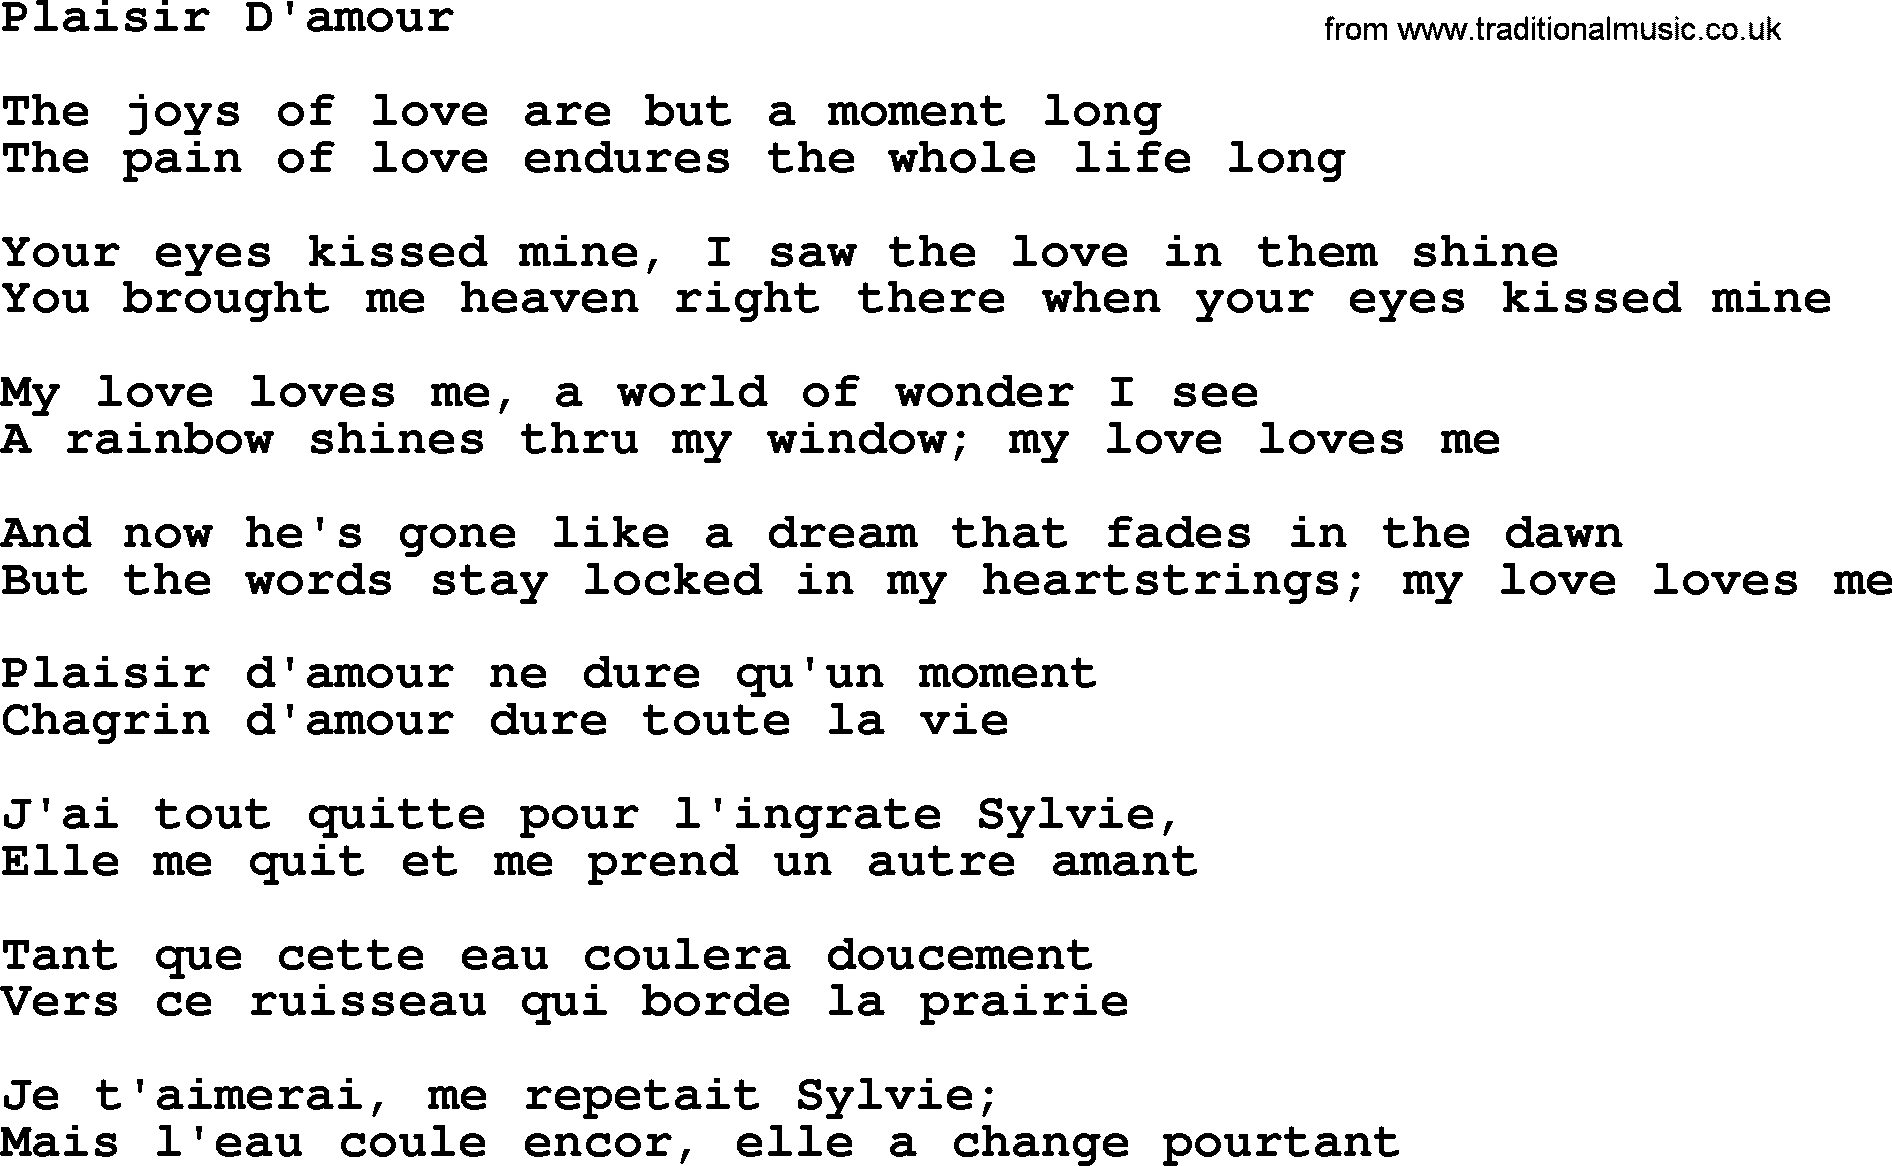 Joan Baez song Plaisir D'amour, lyrics